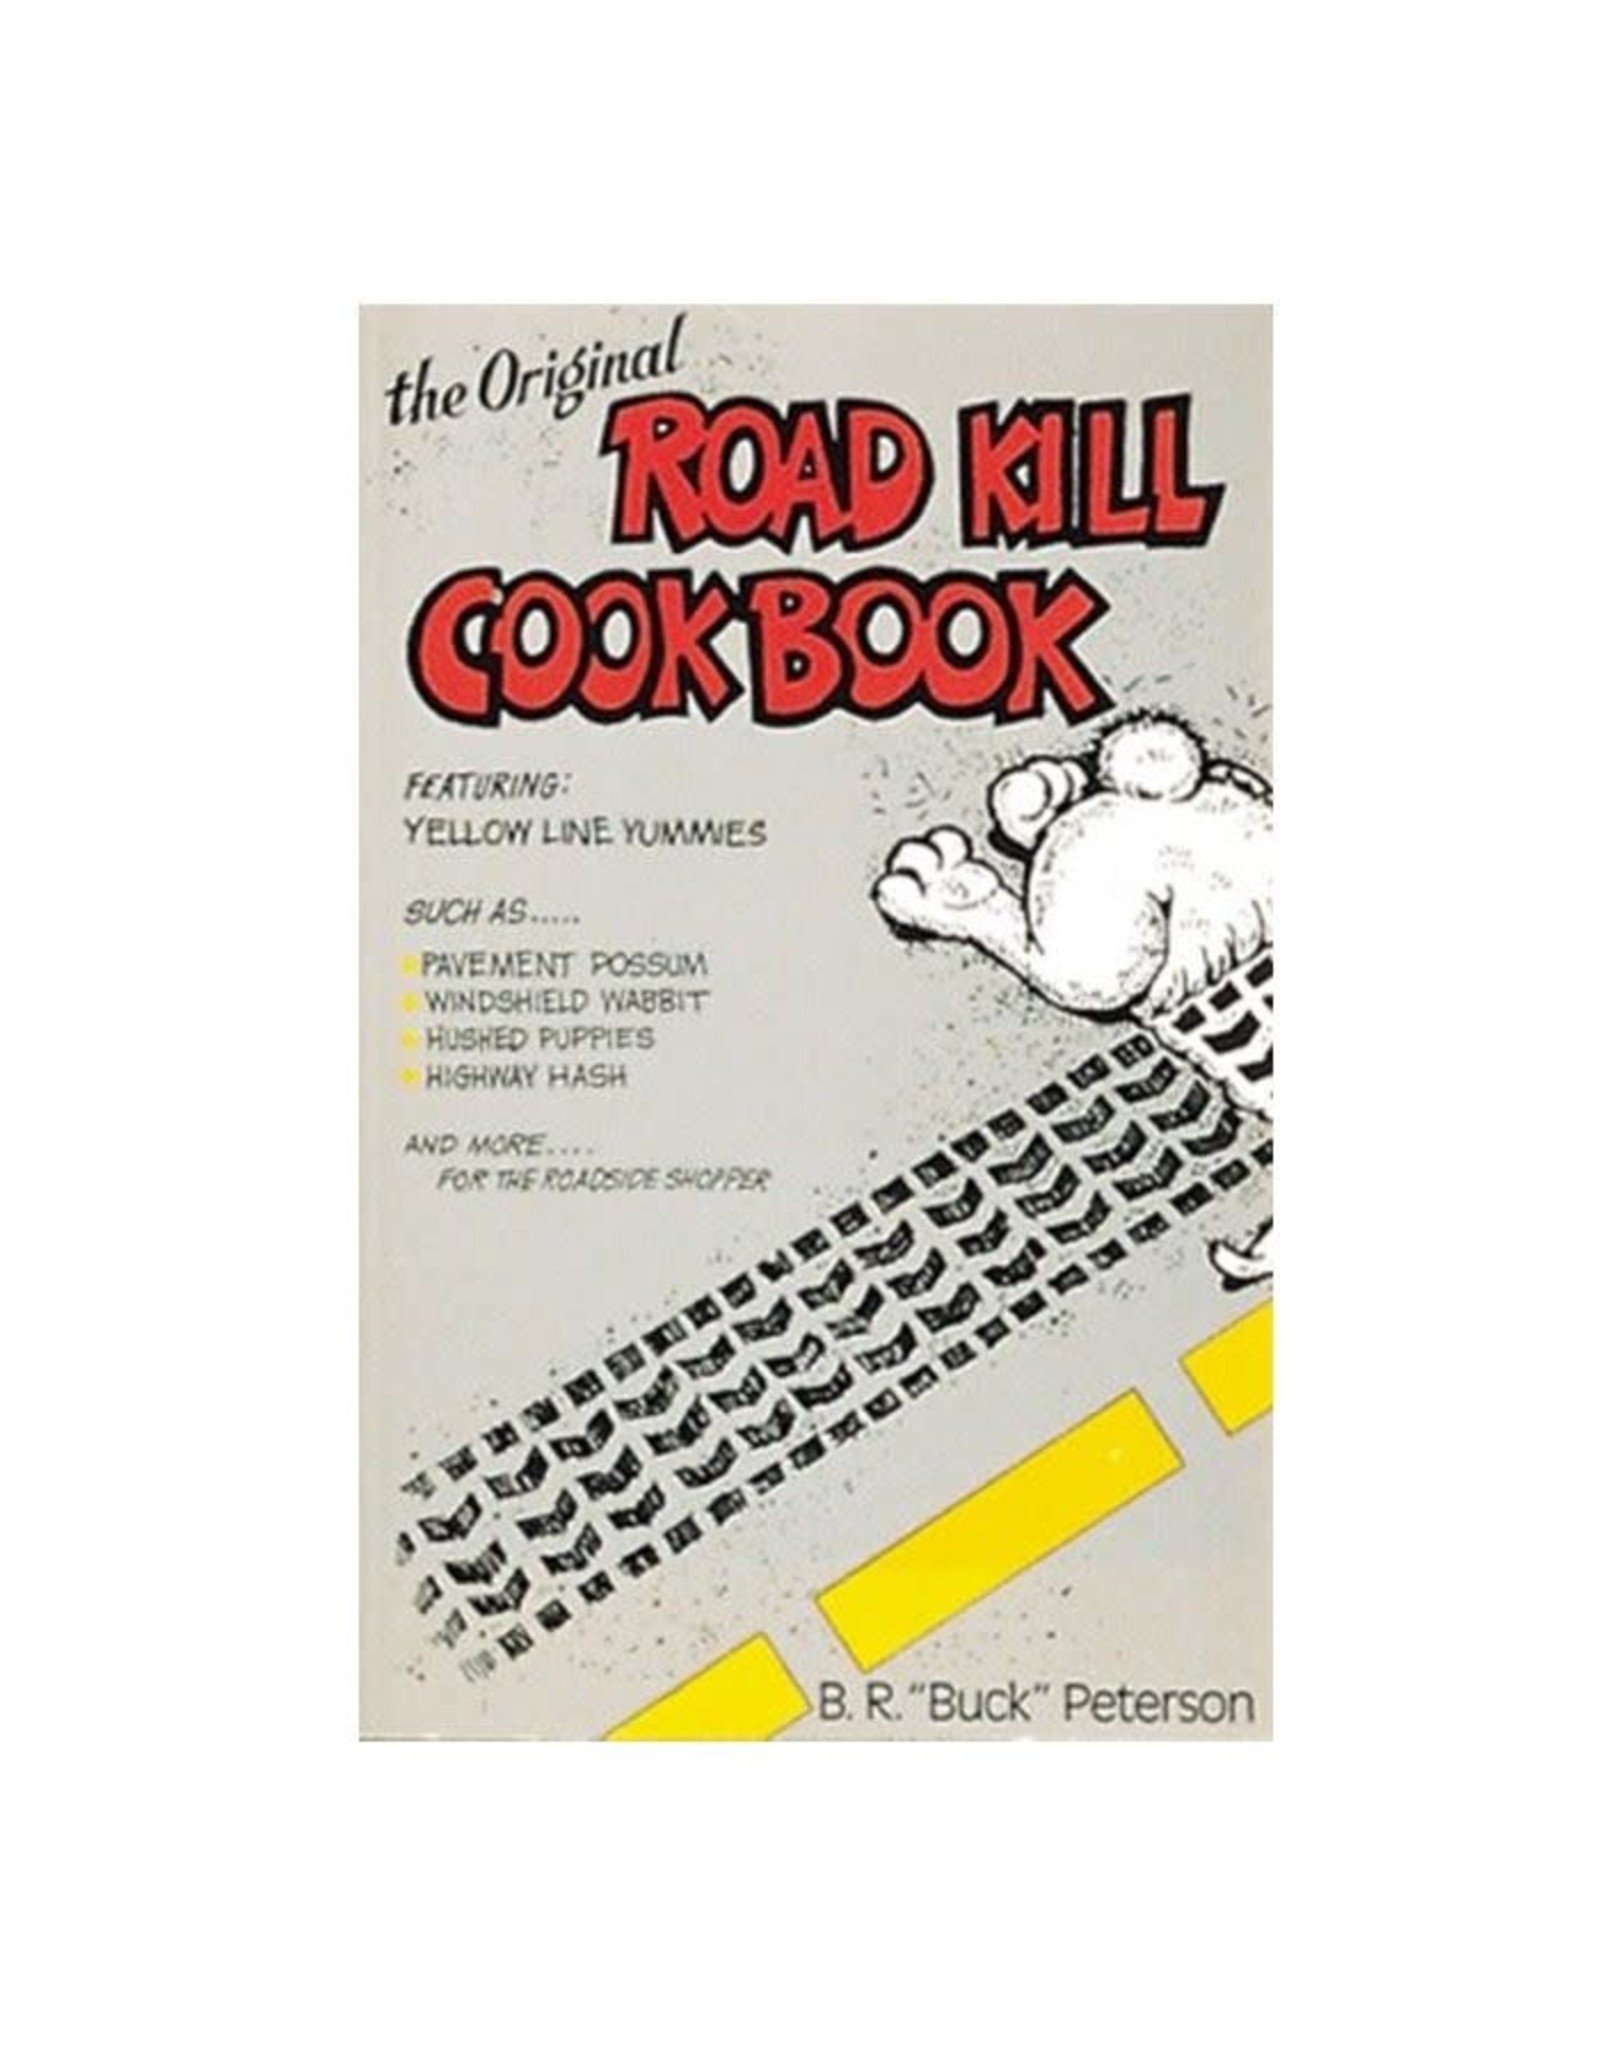 The Original Road Kill Cookbook by B. R. Peterson